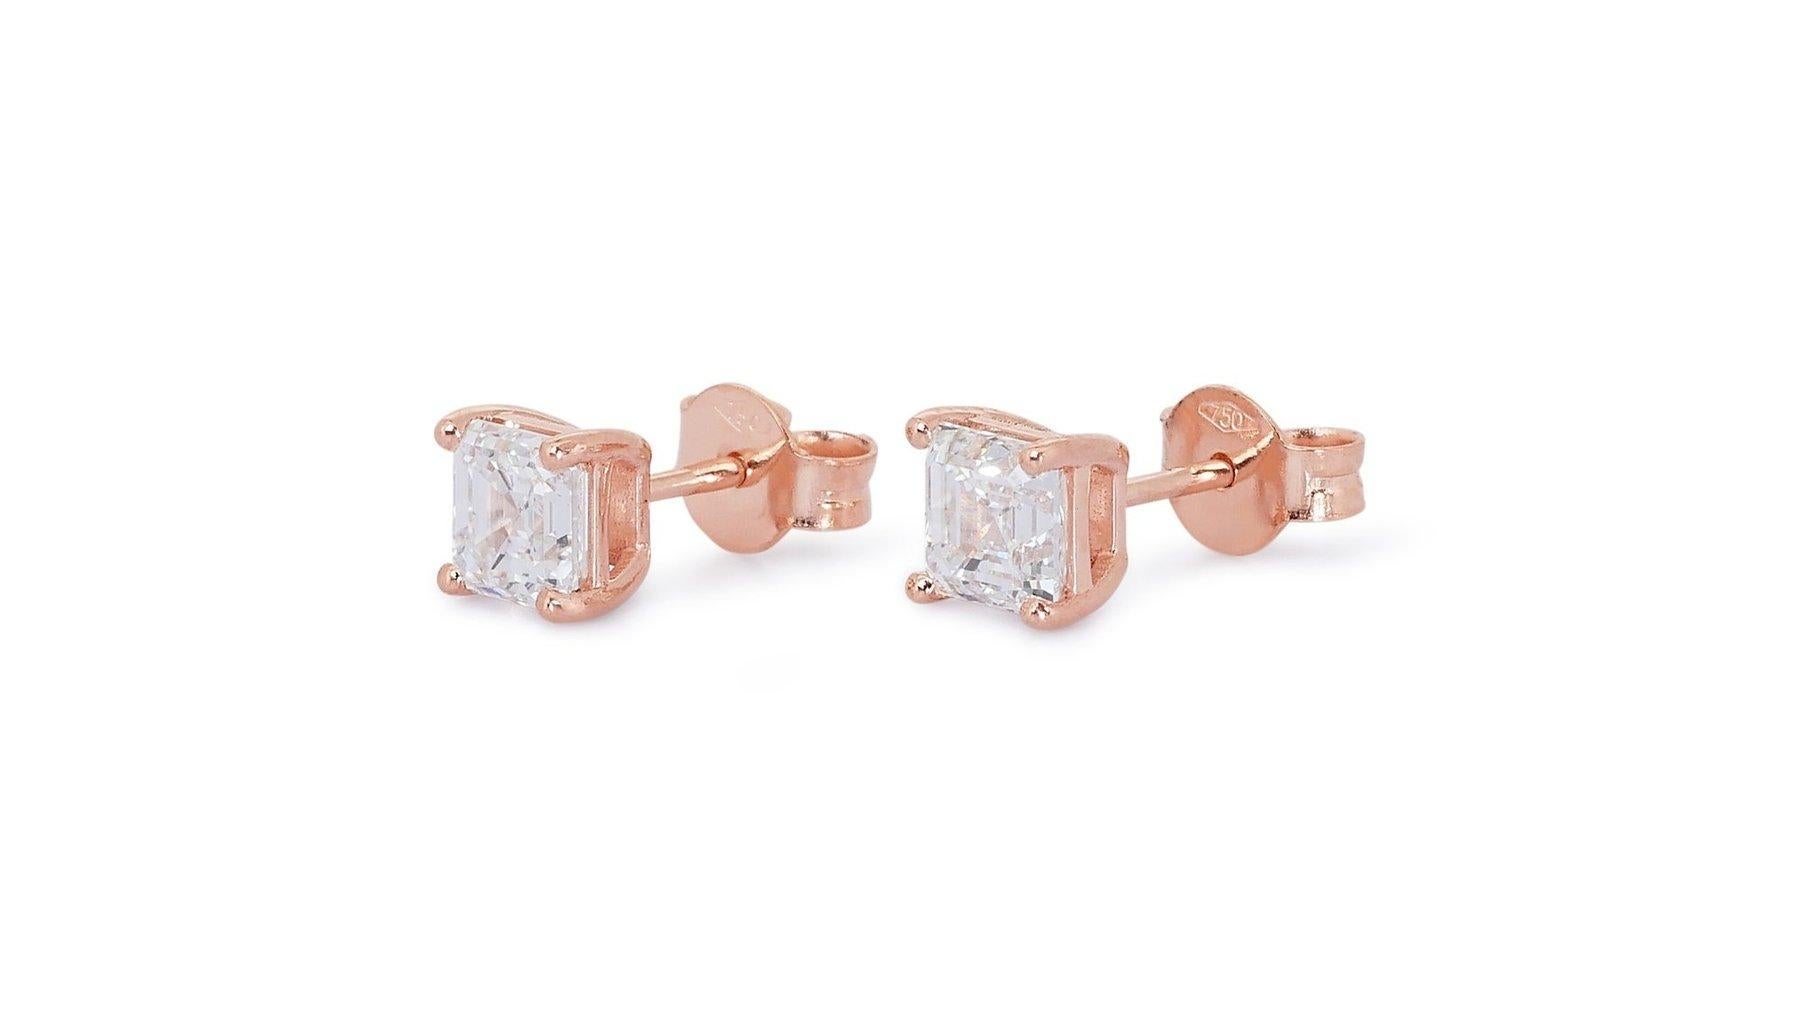 Dazzling 18k Rose Gold Earringgs 1.8 Carat Asscher Cut Diamond Earrings 4